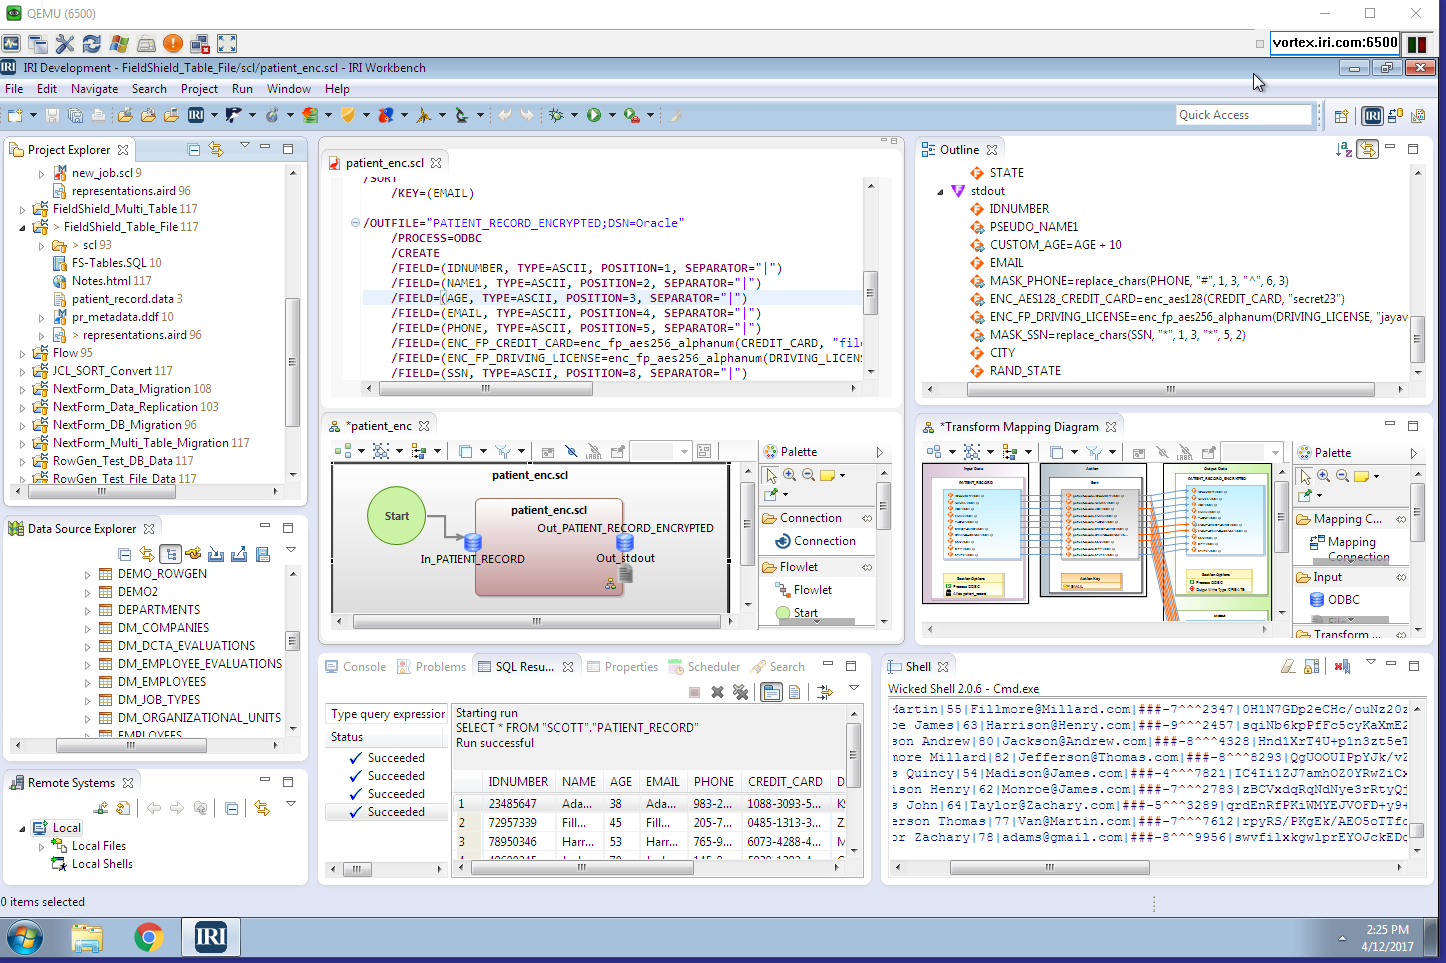 A screenshot of the FieldShield GUI